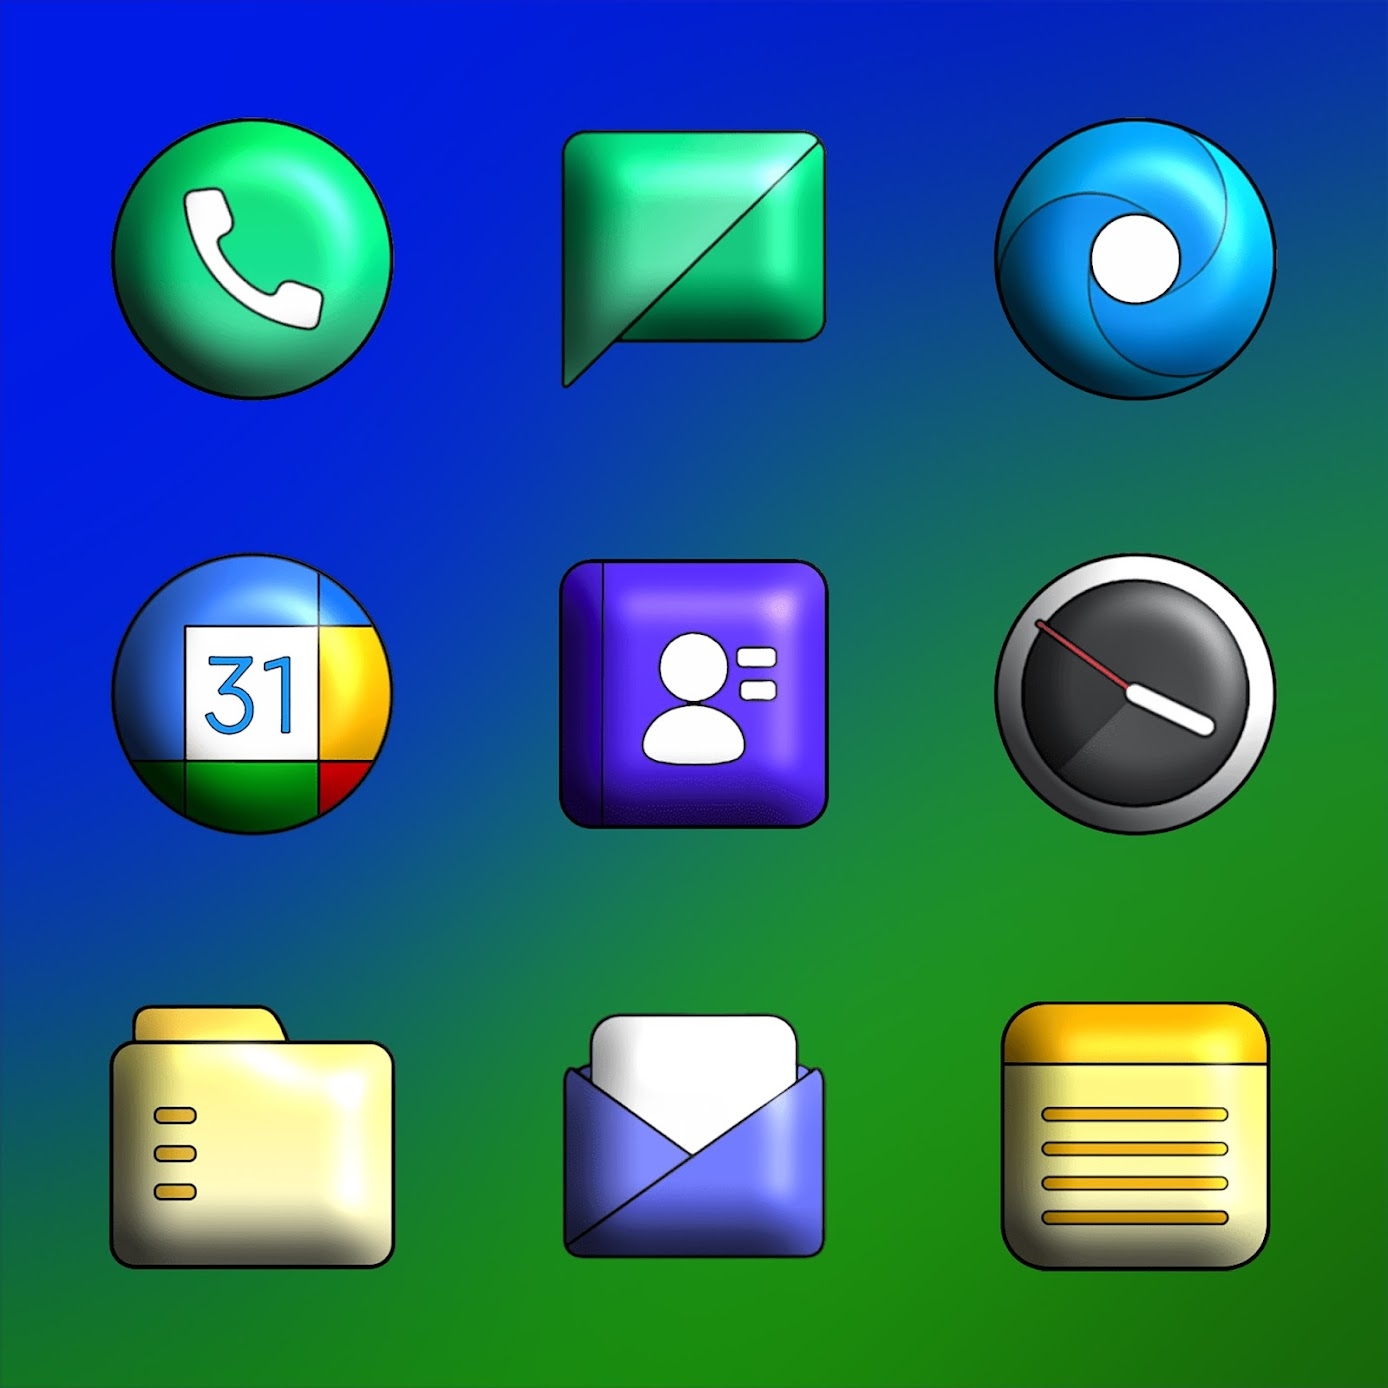 Os icon pack. 3d icon Pack для андроид. 3д иконки для Color os System Launcher. Значок насыщенные цвета. 3d премиум иконка пак.